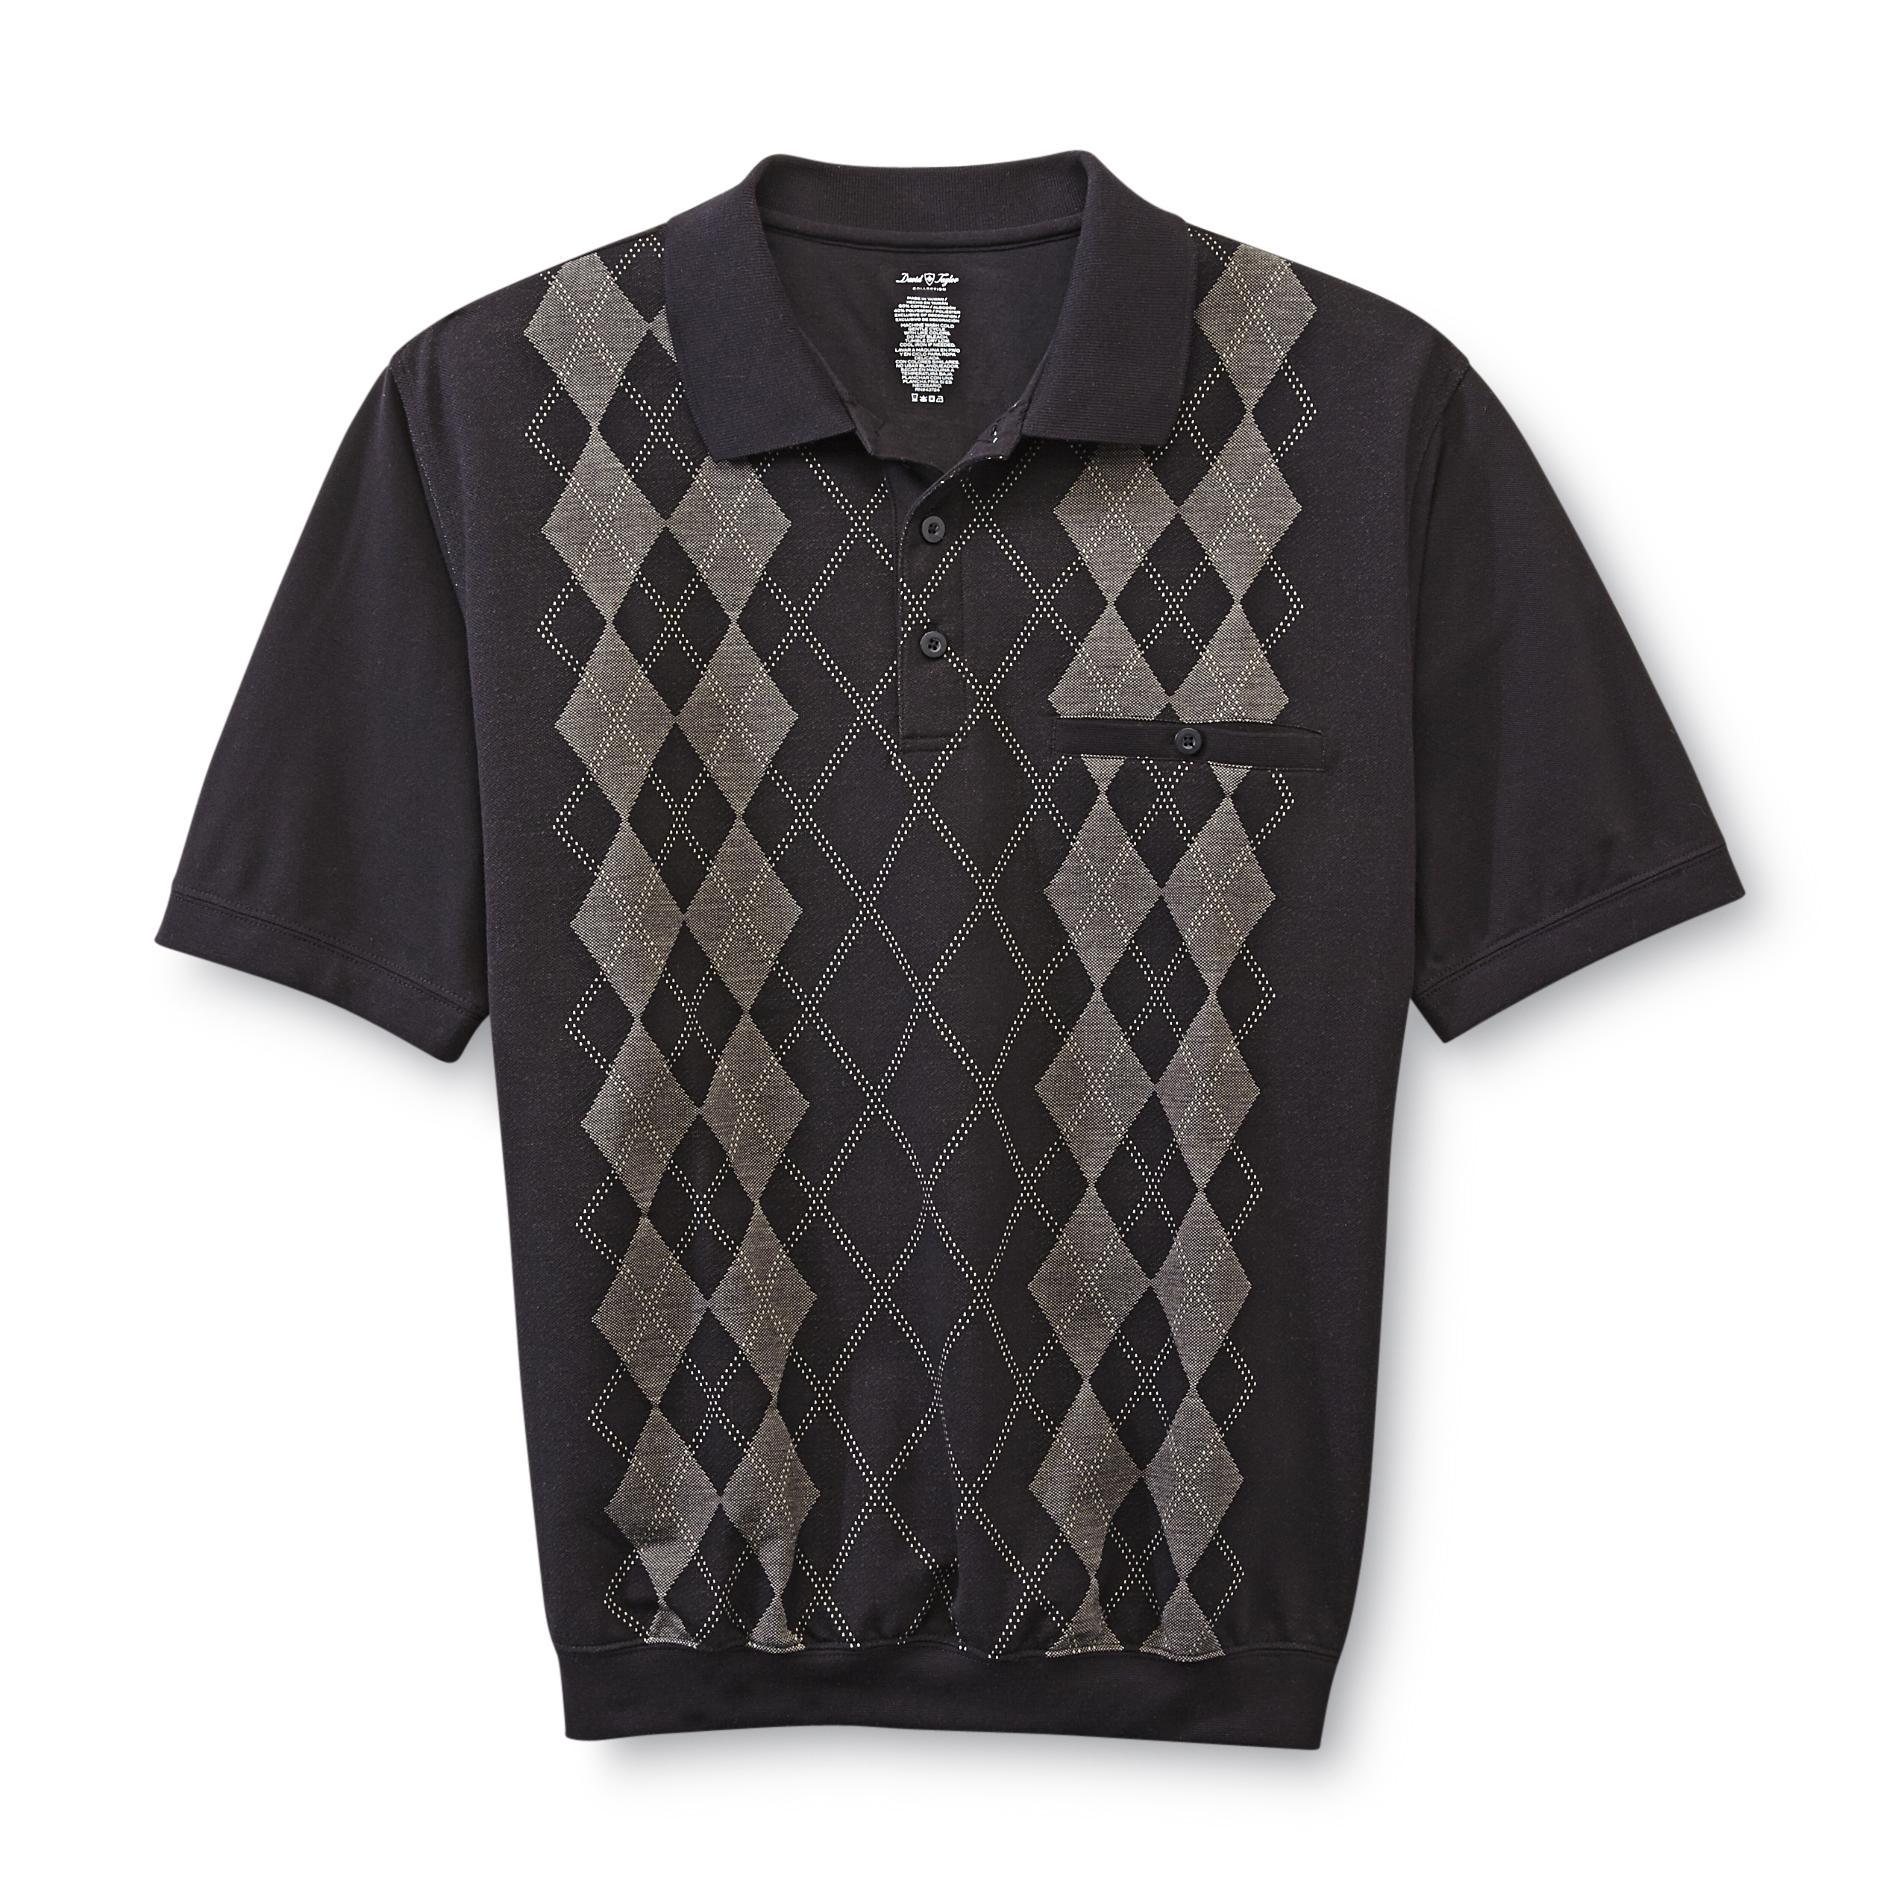 David Taylor Collection Men's Jacquard Knit Polo Shirt - Argyle Pattern